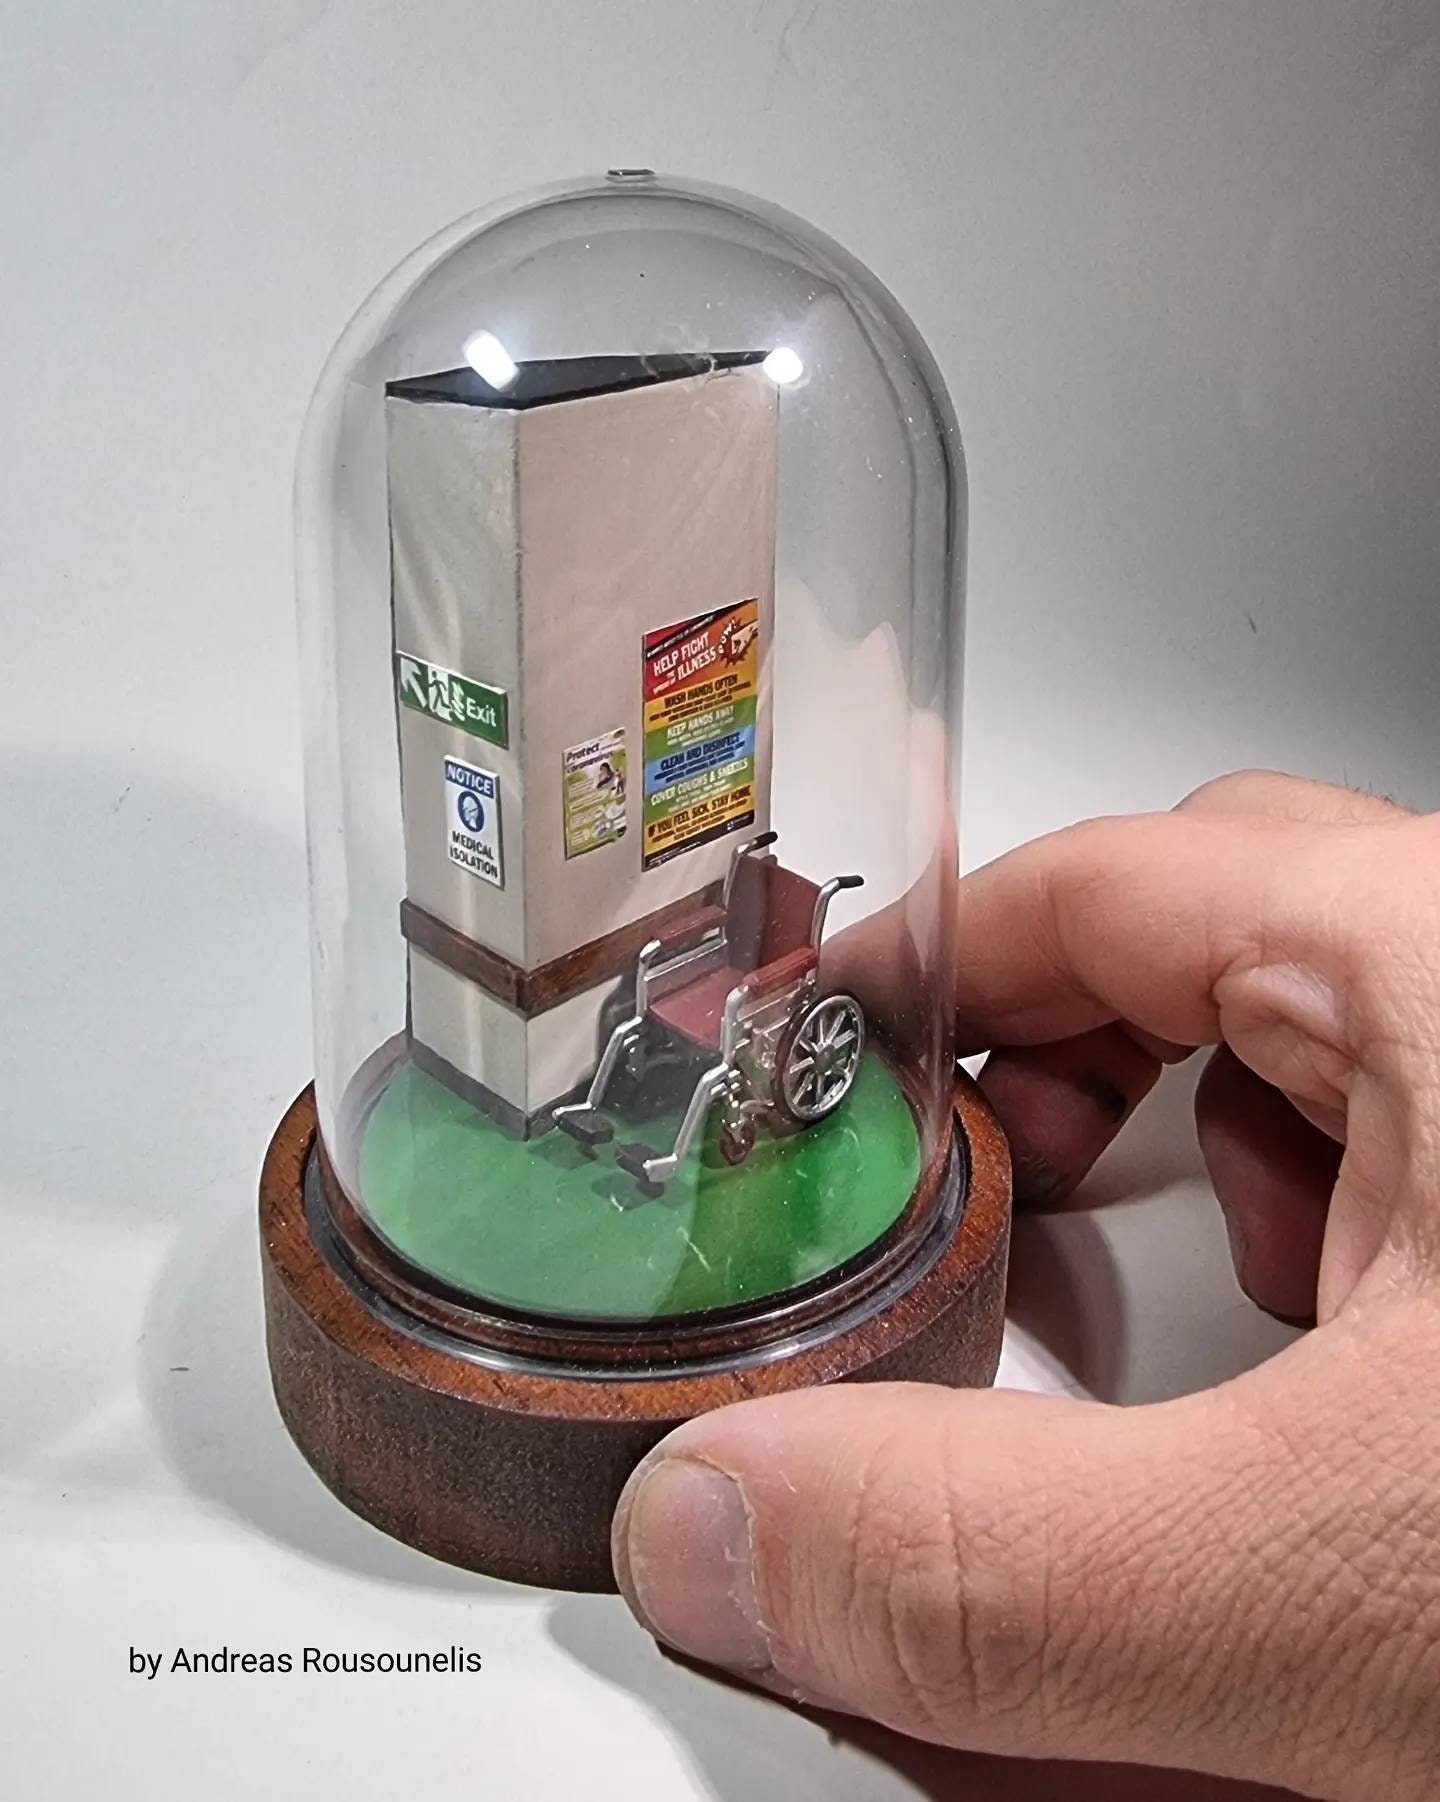 Border Collie Dog Miniature Diorama Box, Cottagecore Shelf Decor